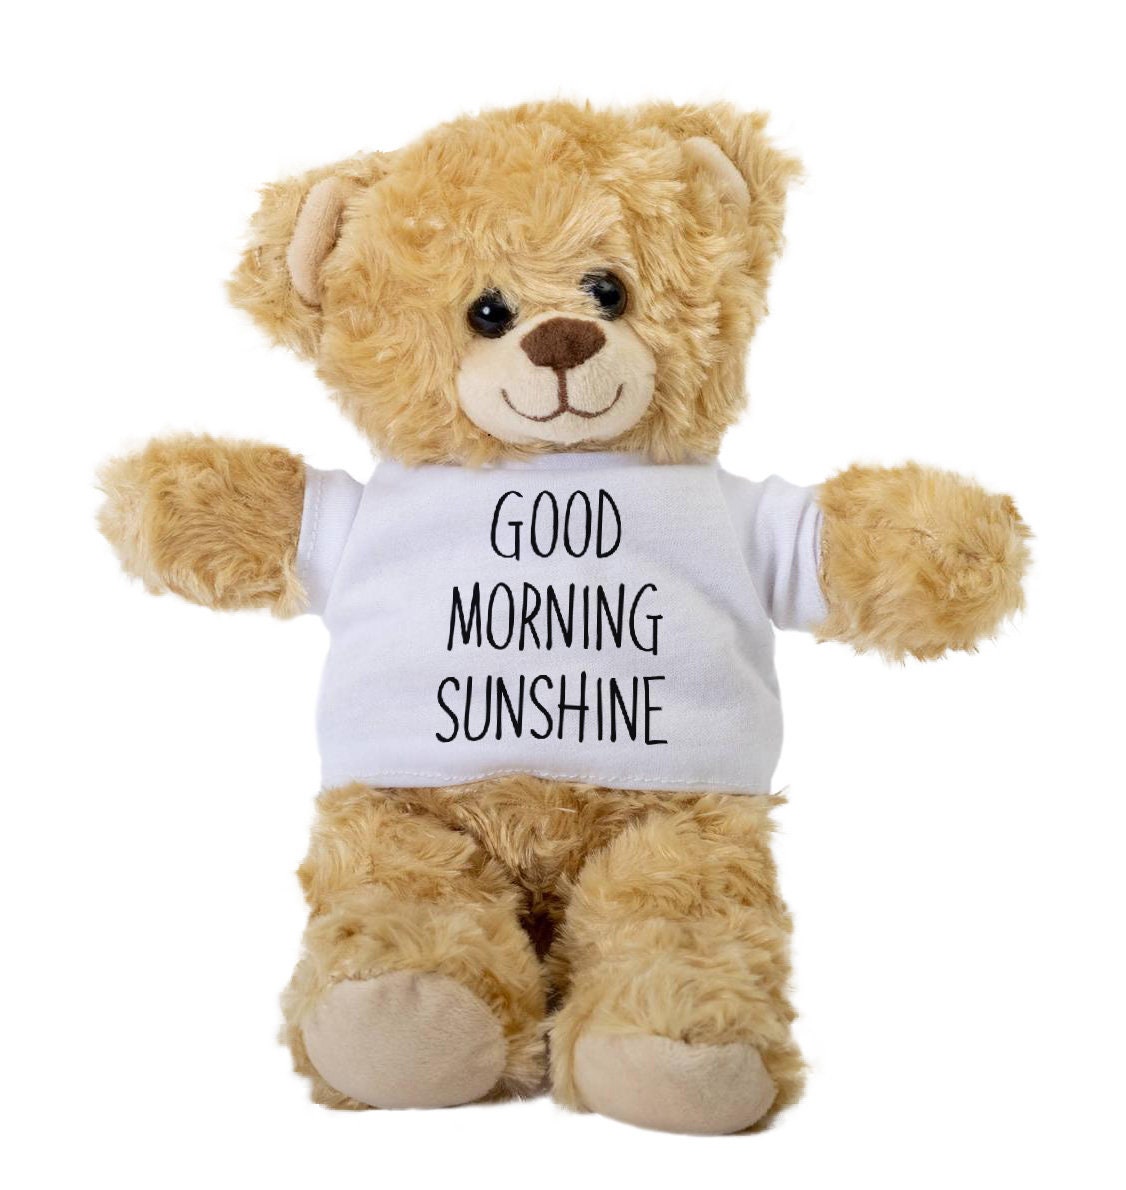 Buy Good Morning Sunshine Today Teddy Bear Gift Stuffed Animal ...